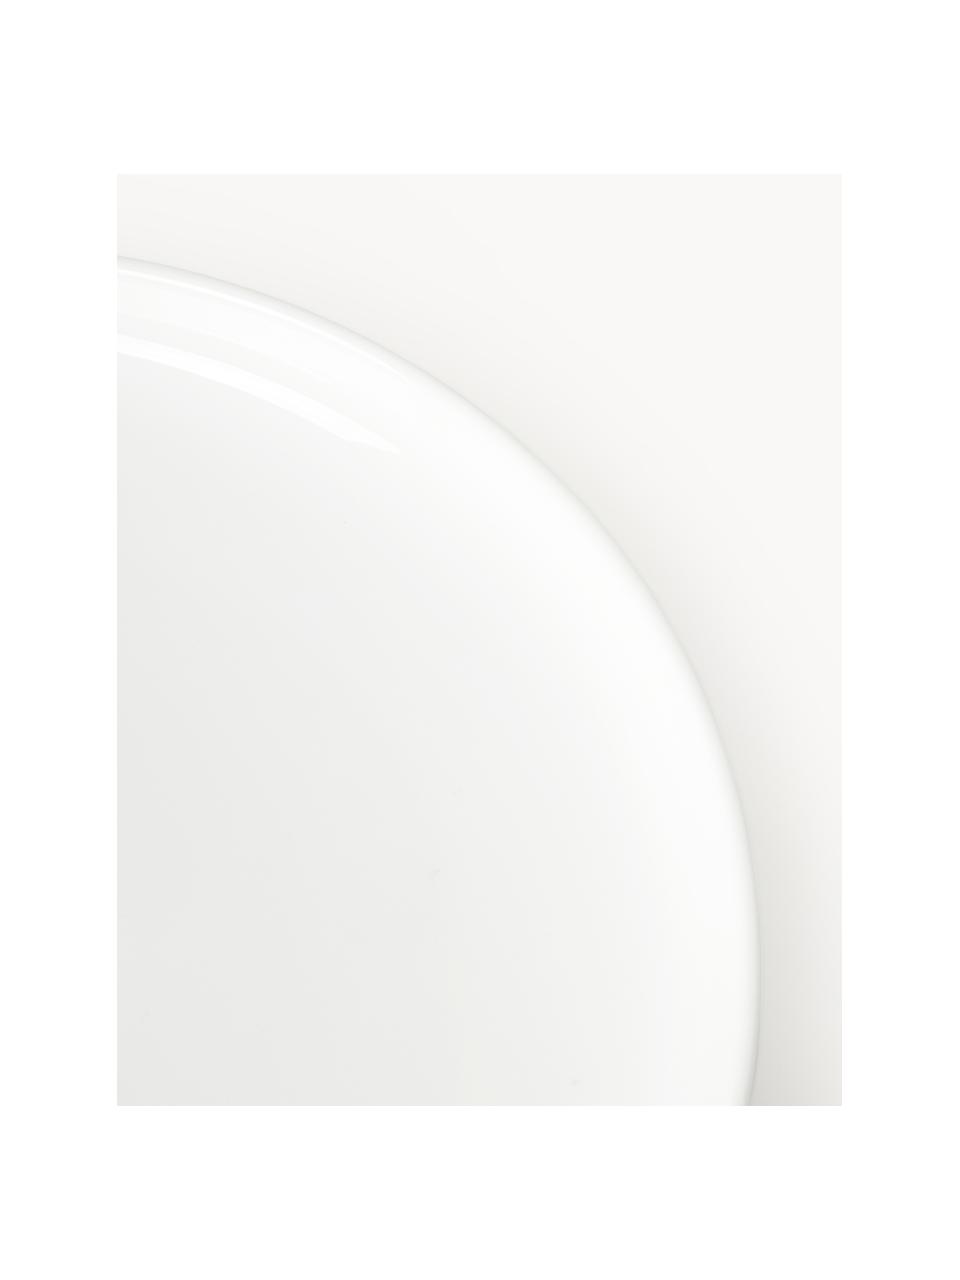 Porseleinen ontbijtborden Nessa, 4 stuks, Hoogwaardig hard porselein, geglazuurd, Gebroken wit, glanzend, Ø 19 cm